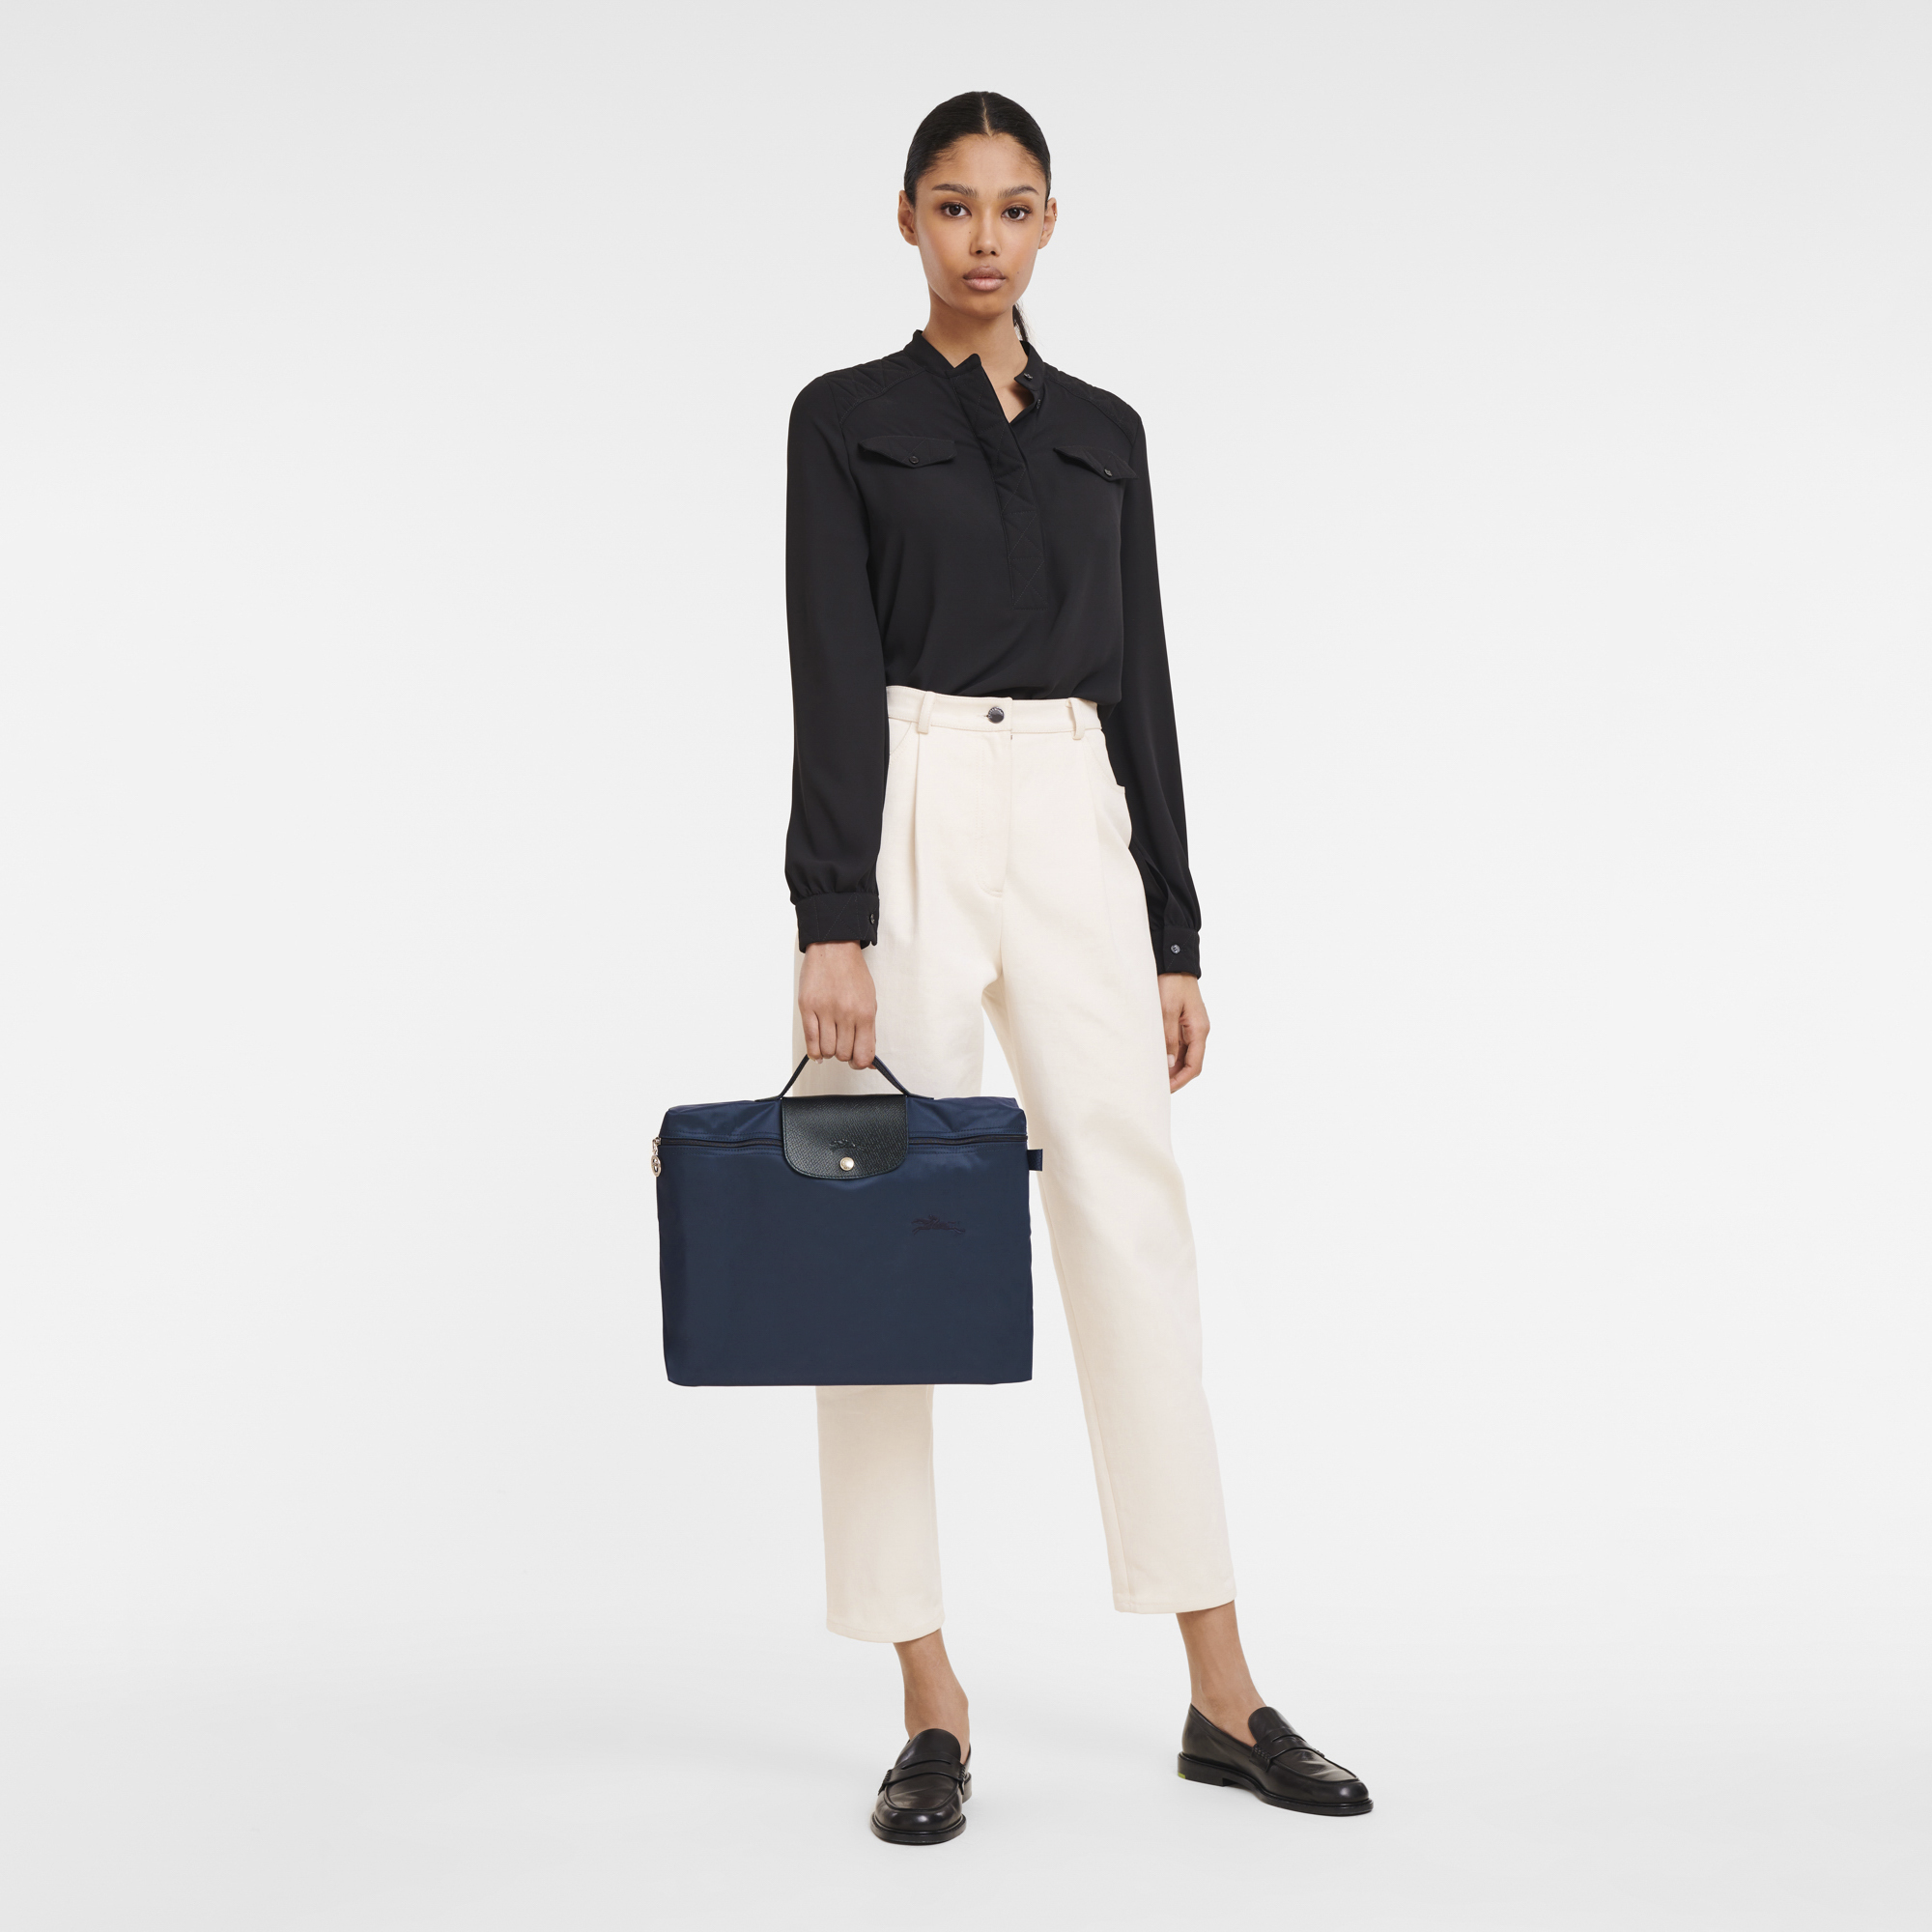 CLOSED) Longchamp Le Pliage Filet - Mini & Standard, Men's Fashion, Bags,  Sling Bags on Carousell